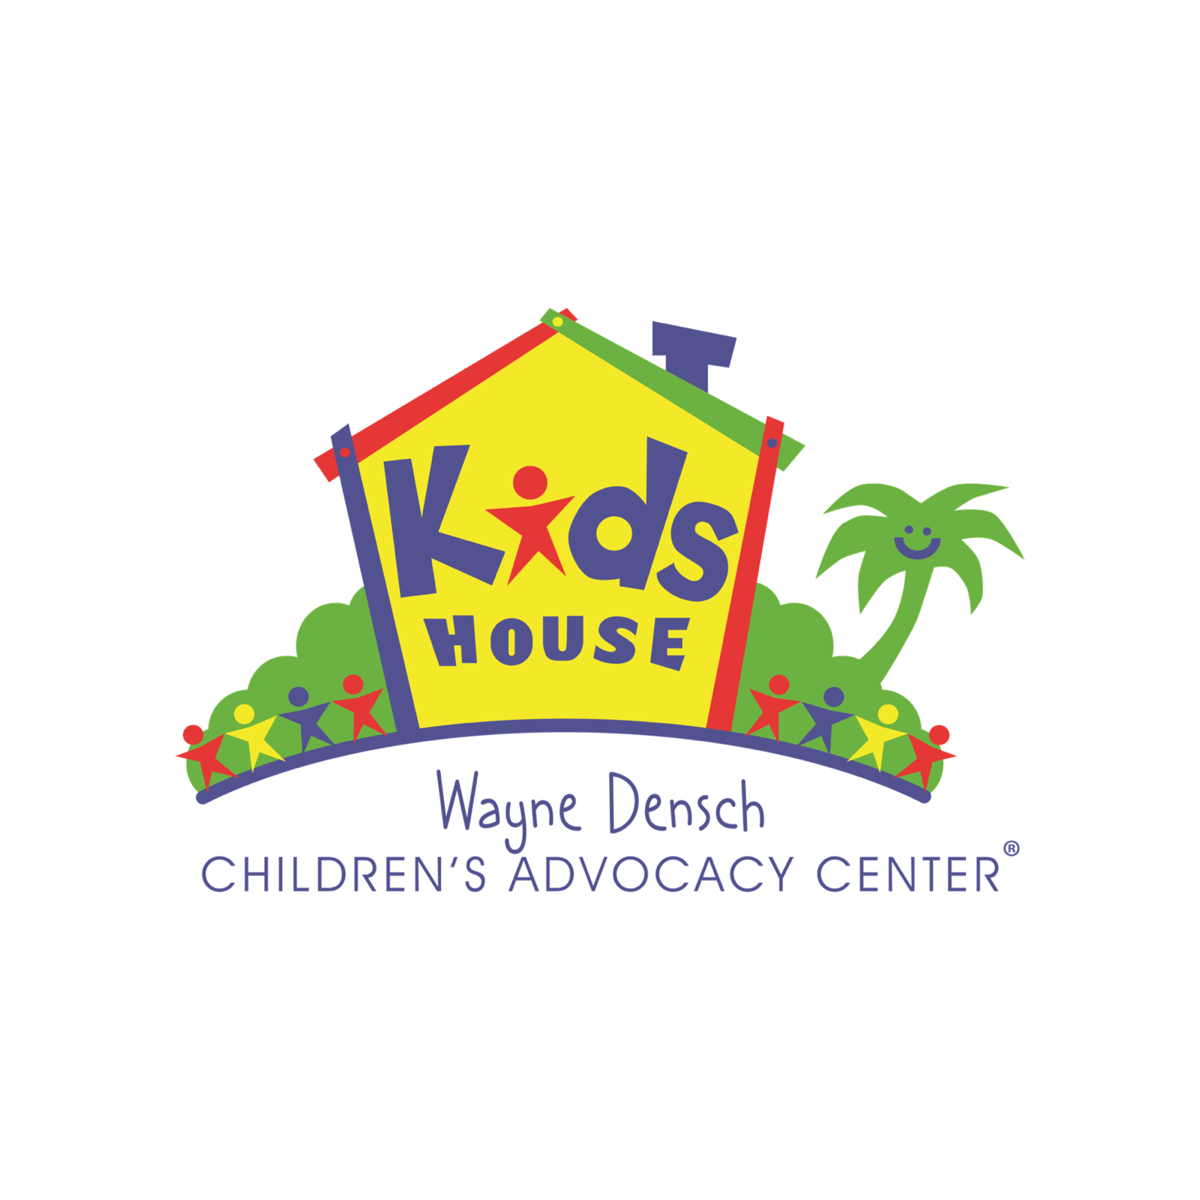 (c) Kidshouse.org